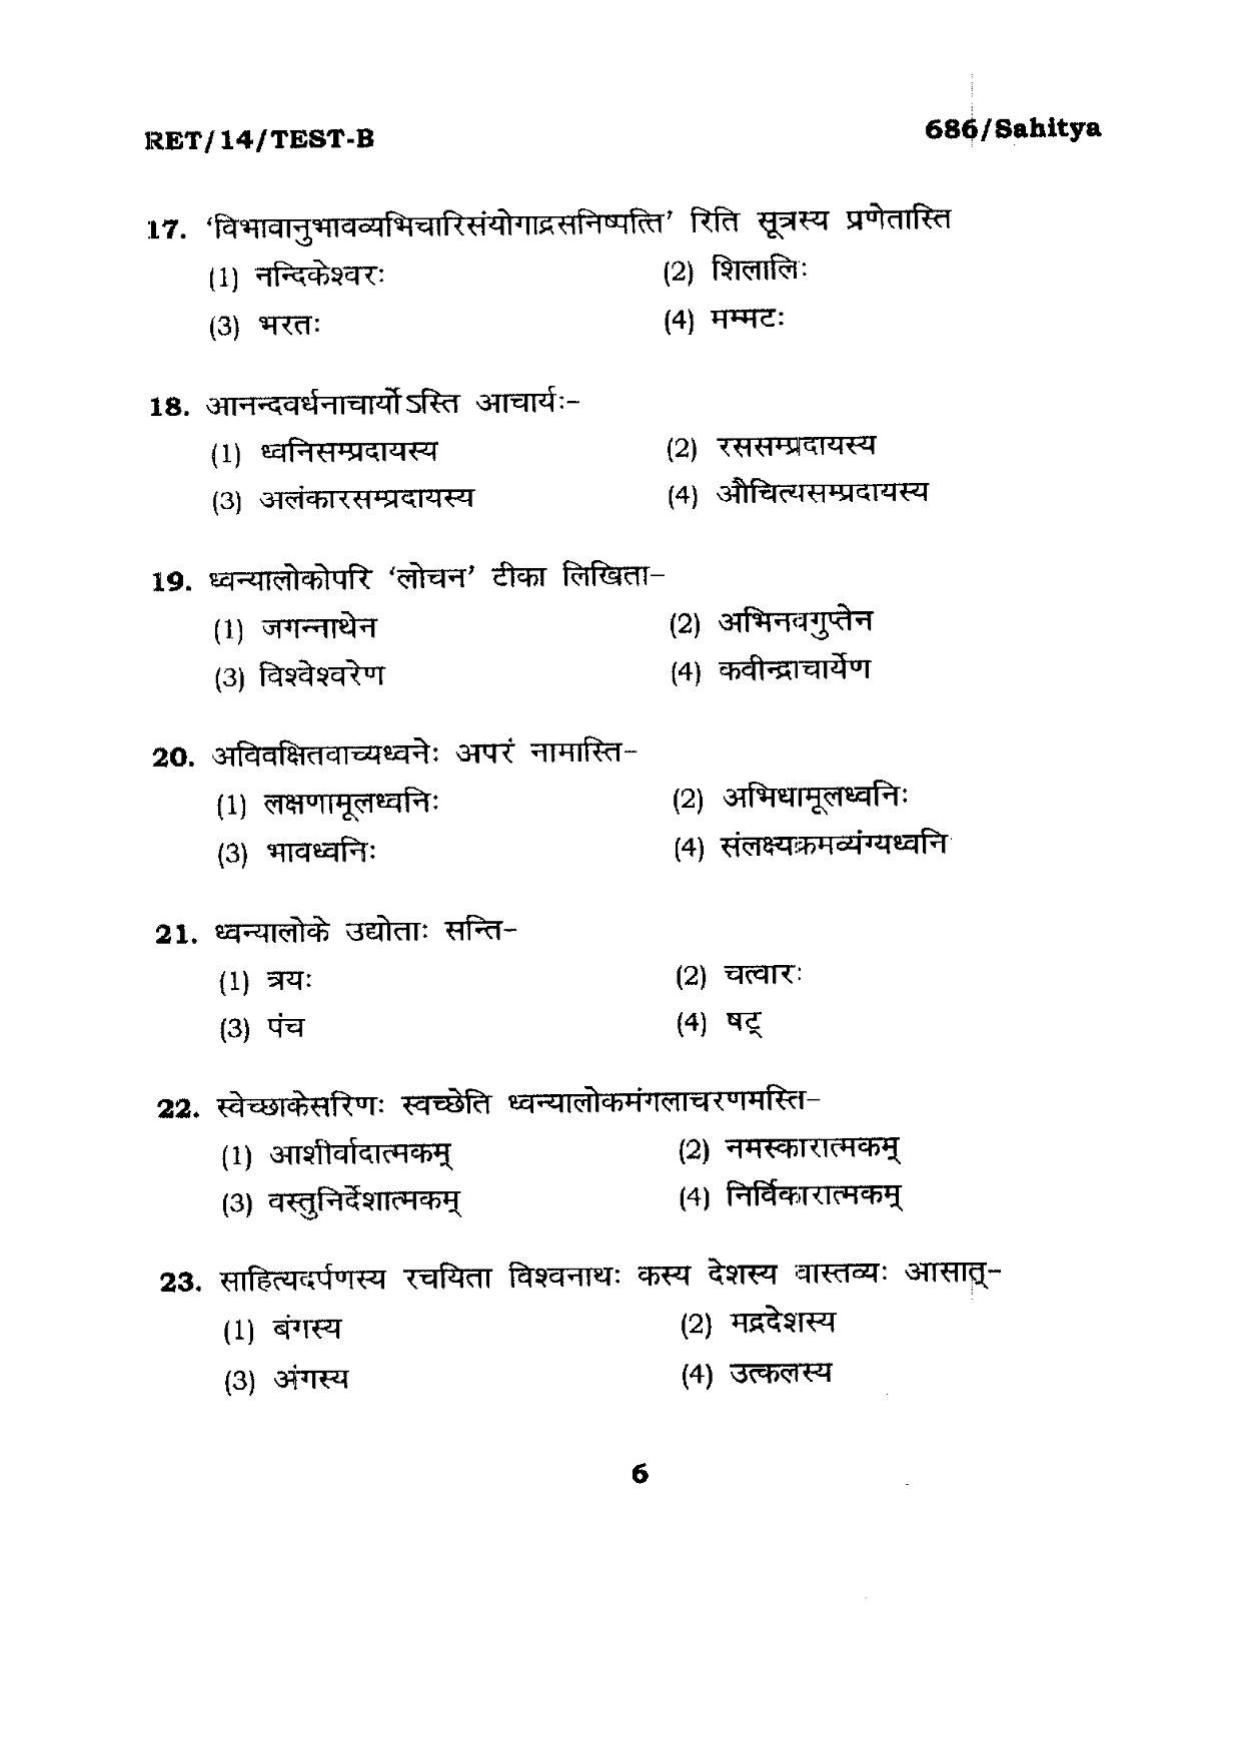 BHU RET Sahitya 2014 Question Paper - Page 6